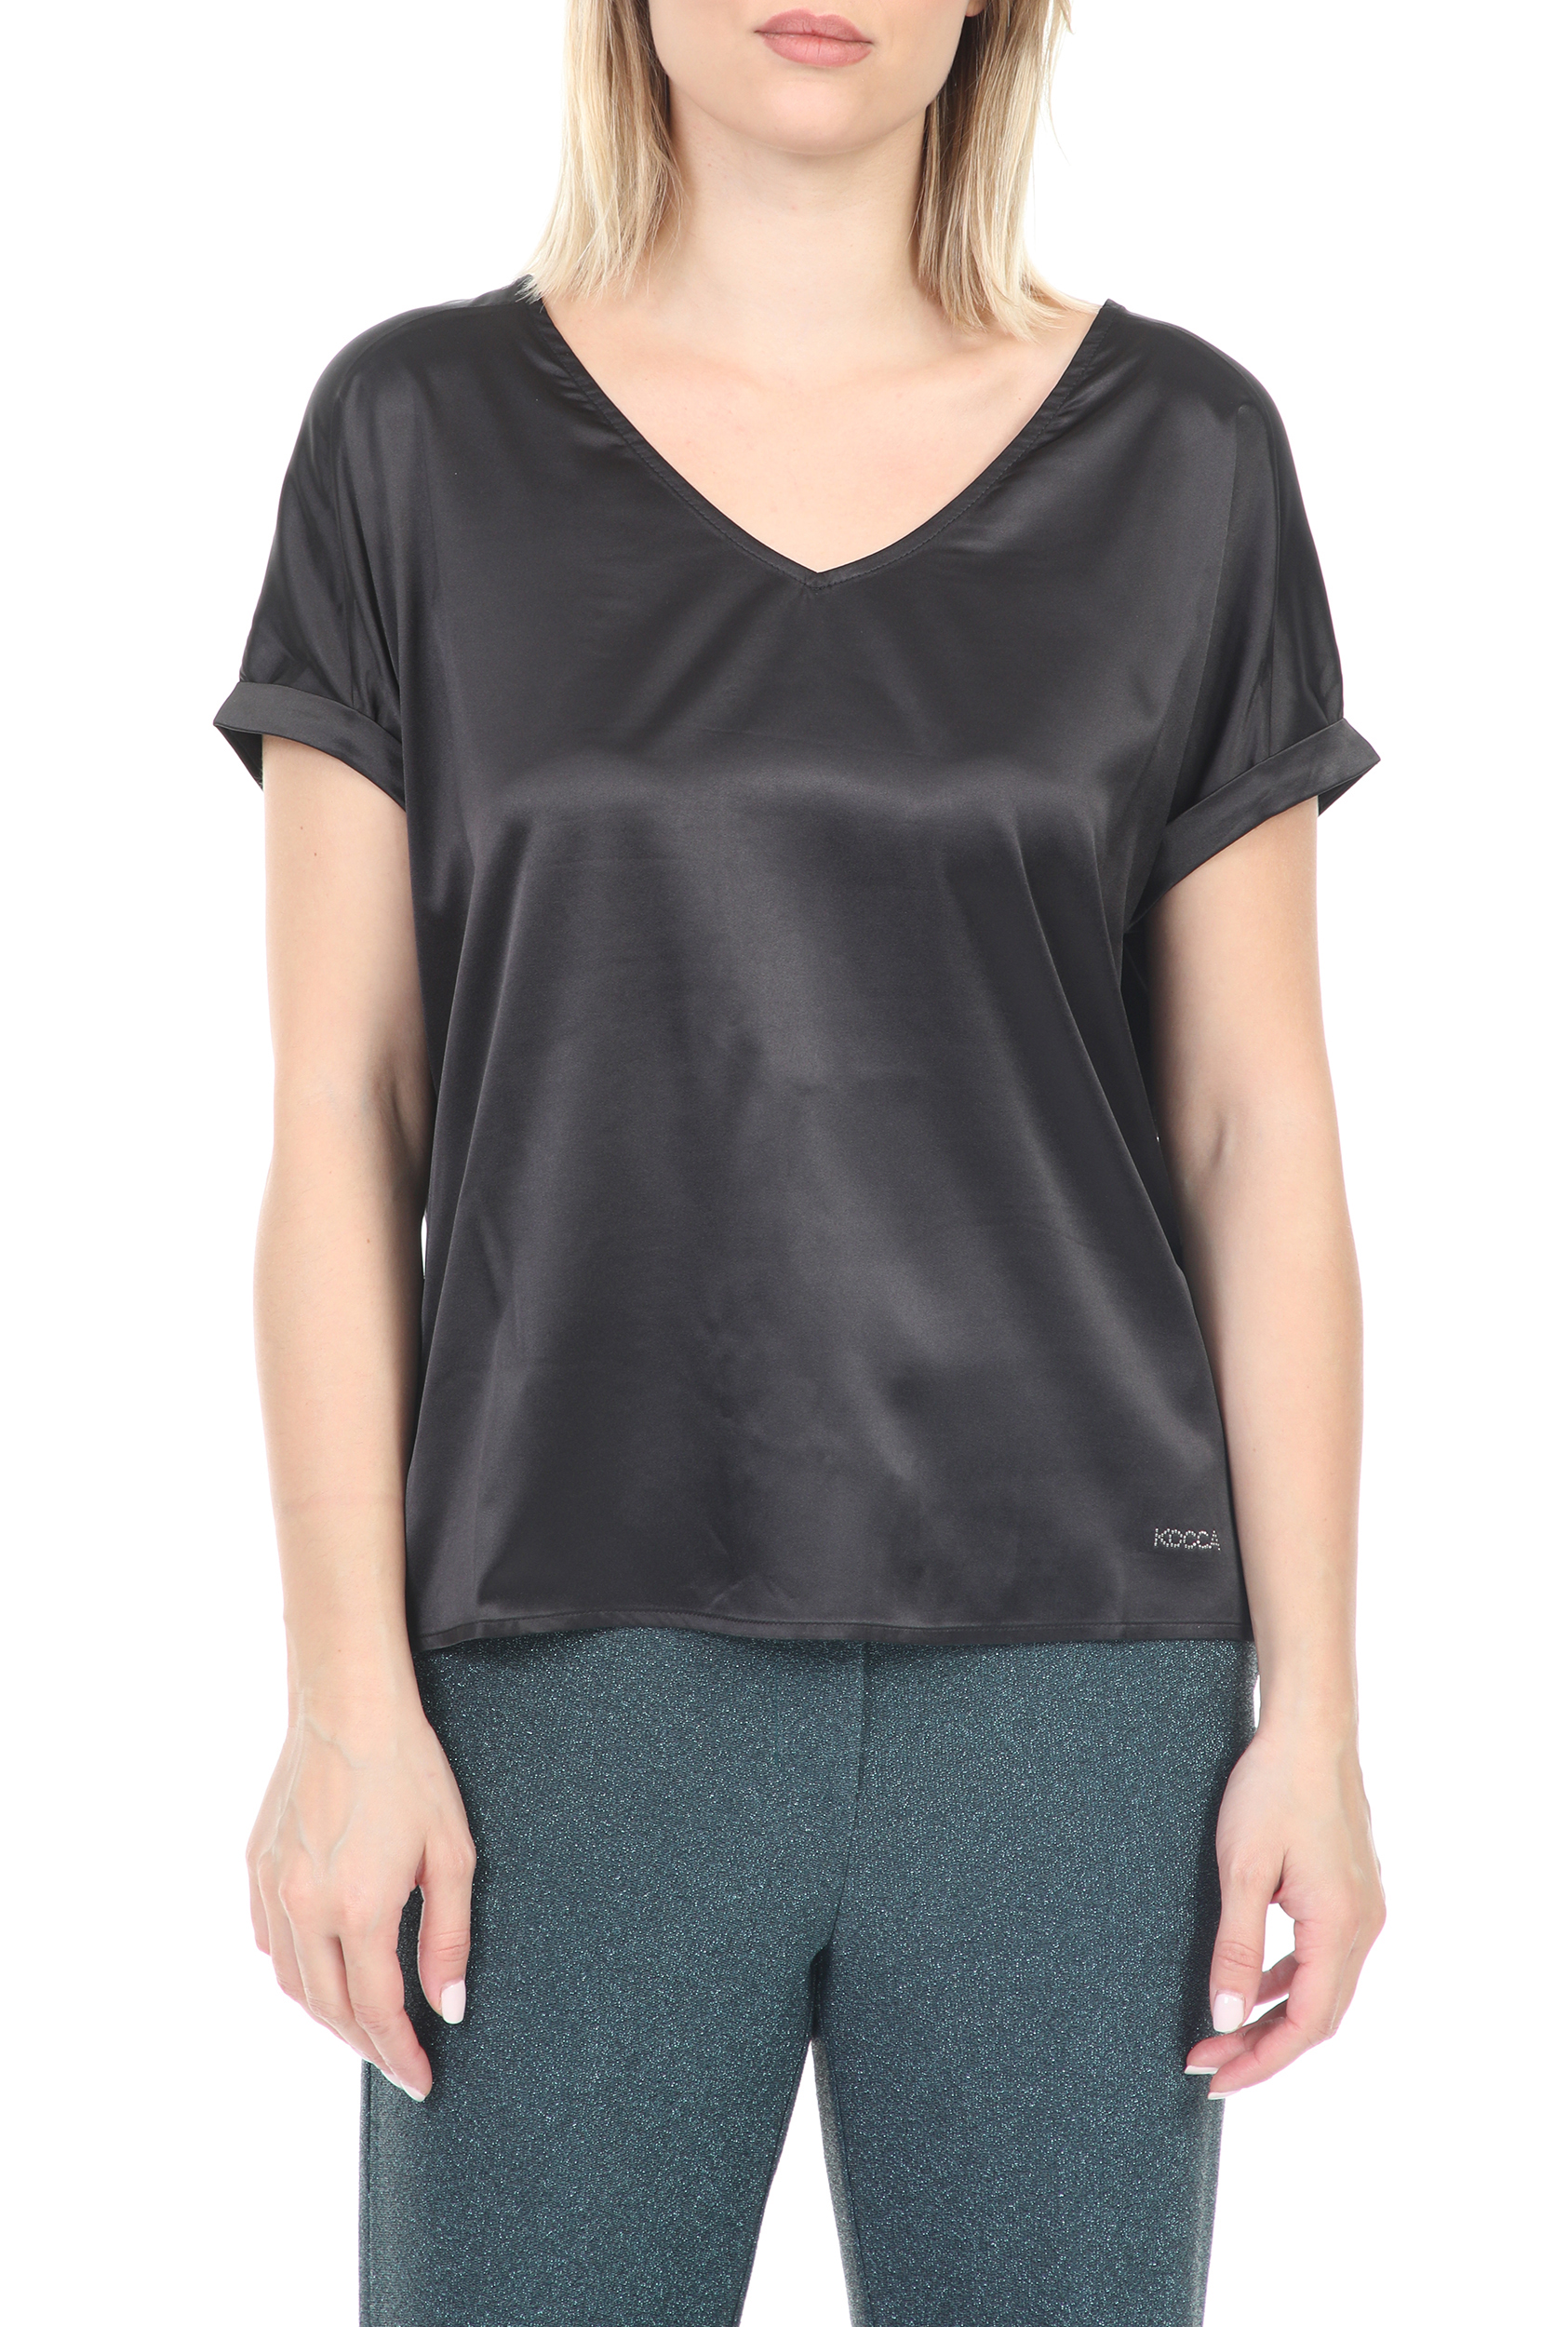 KOCCA – Γυναικεία μπλούζα KOCCA BLANES μαύρη 1802685.0-0071